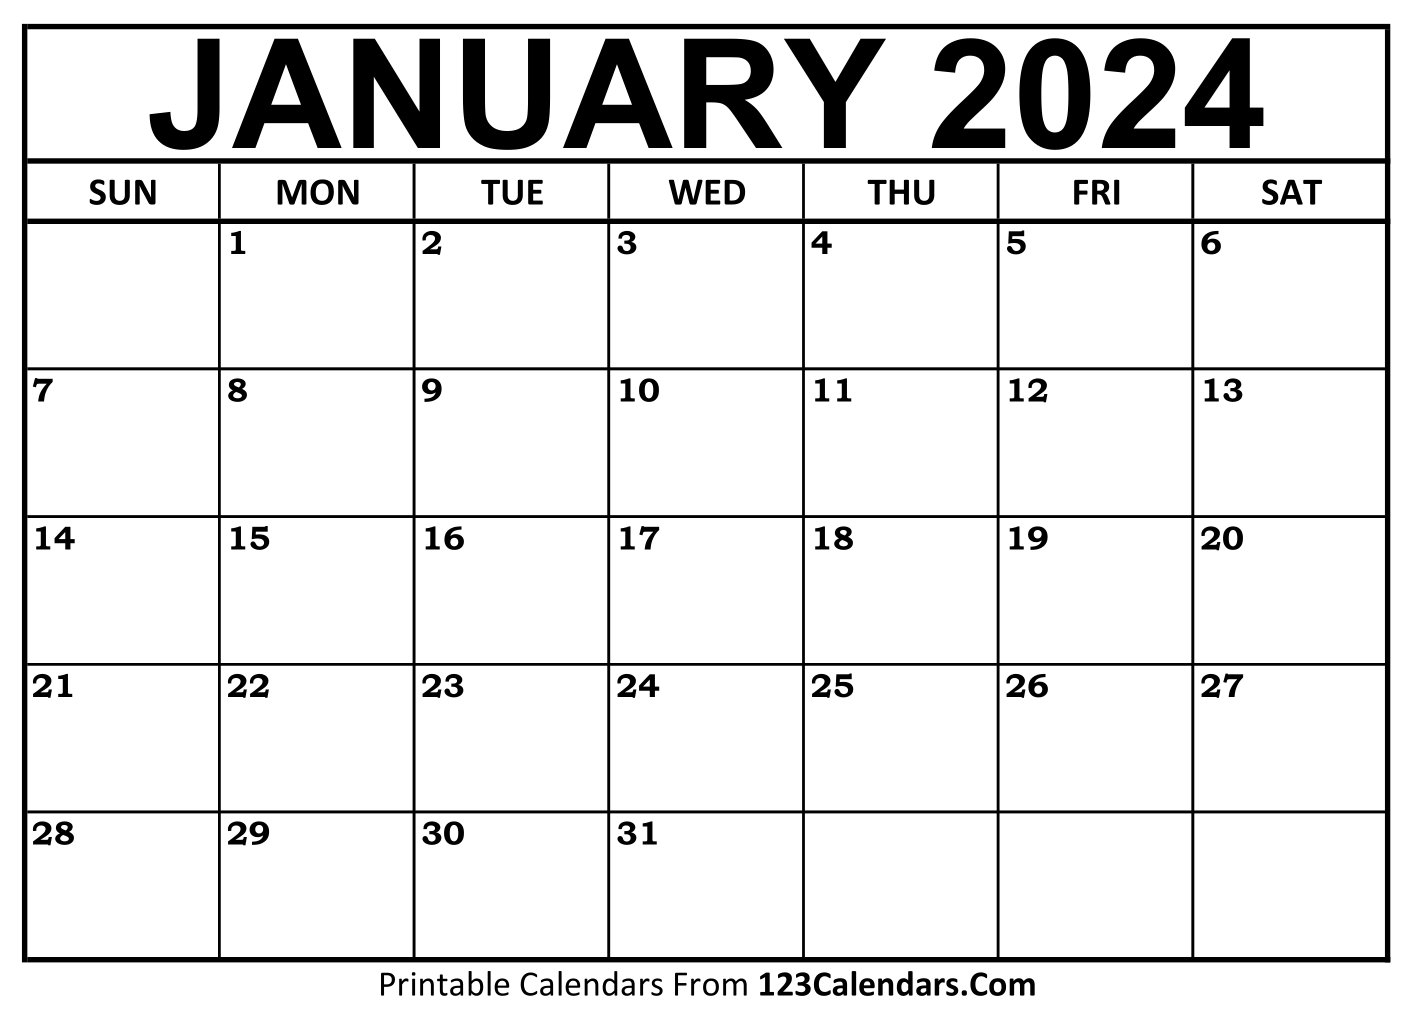 Printable January 2024 Calendar Templates - 123Calendars for A-Printable-Calendar January 2024